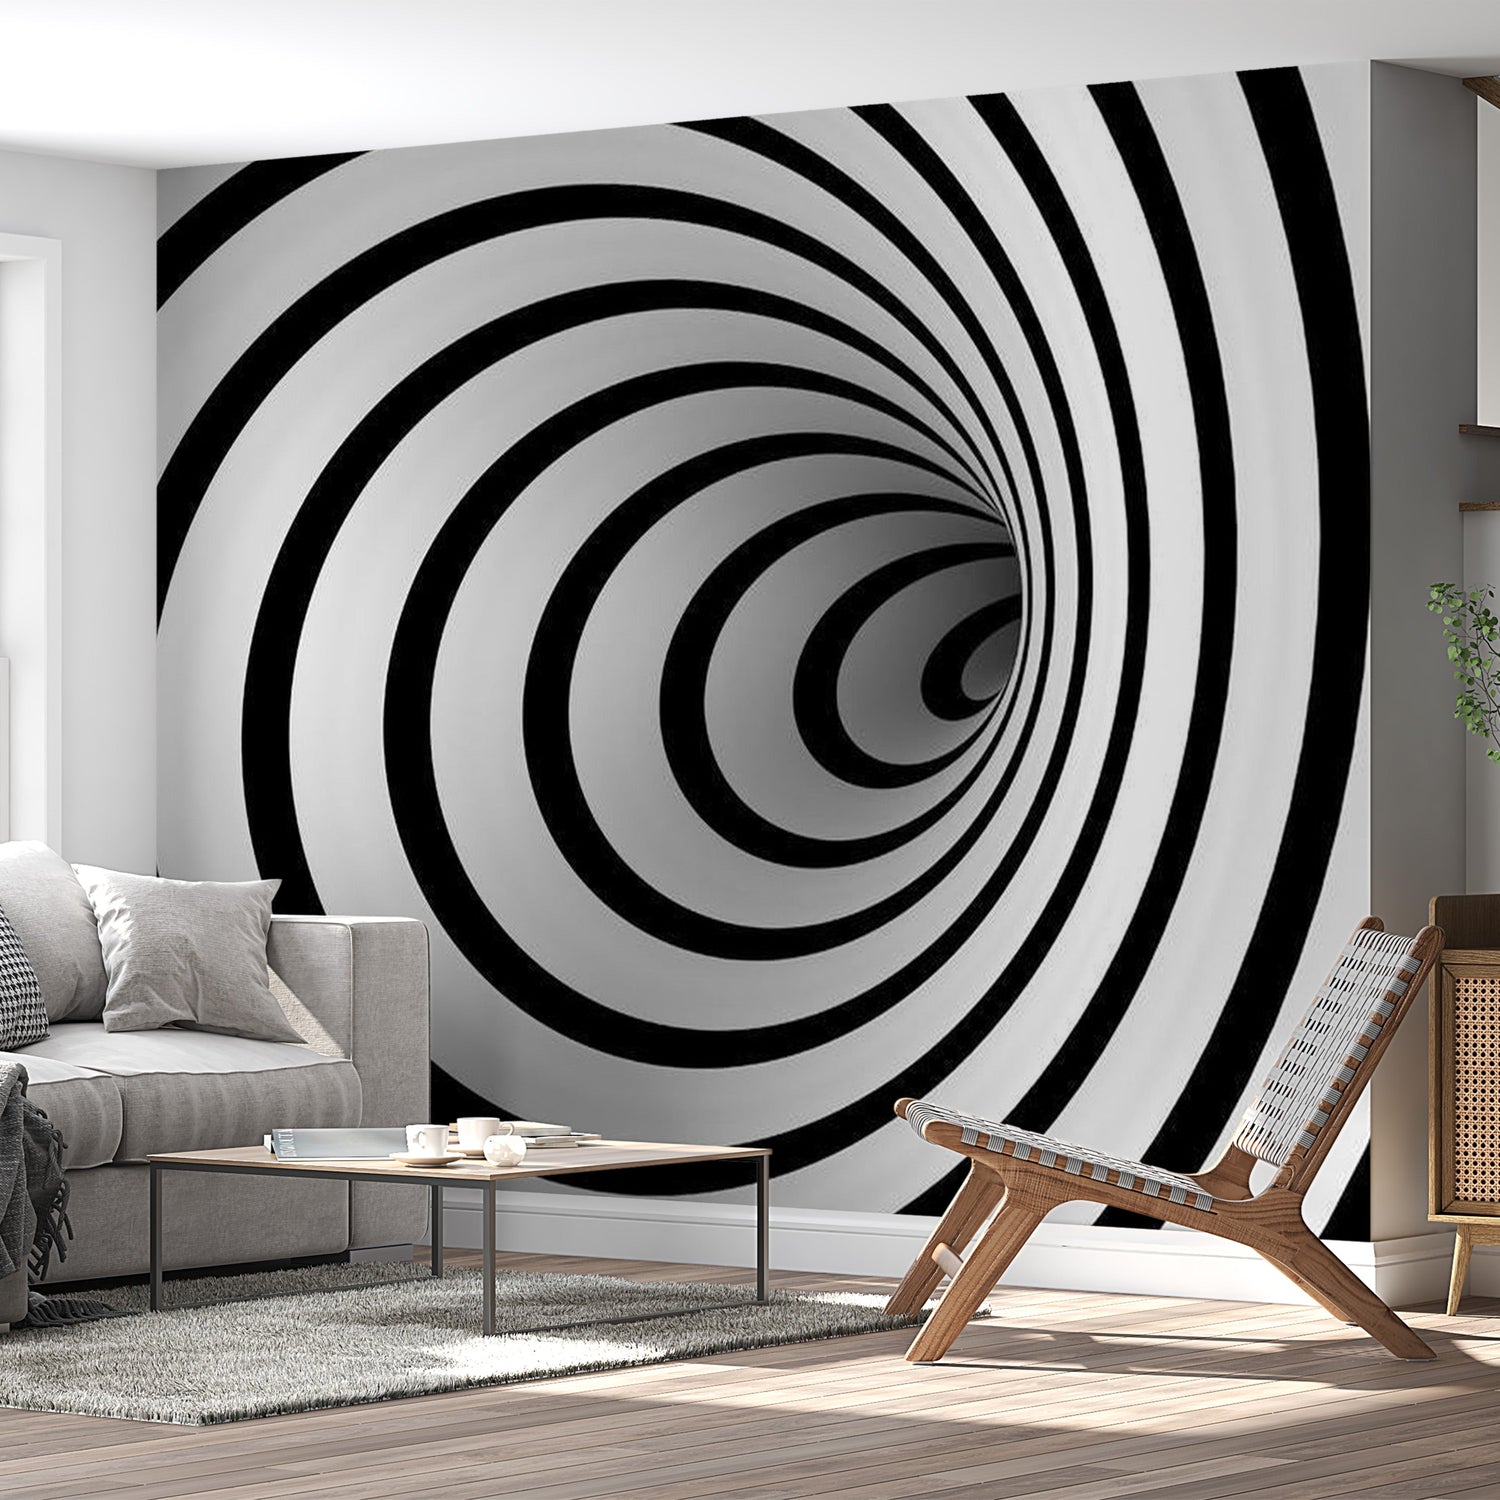 3D Illusion Wallpaper Wall Mural - Black & White Tunnel